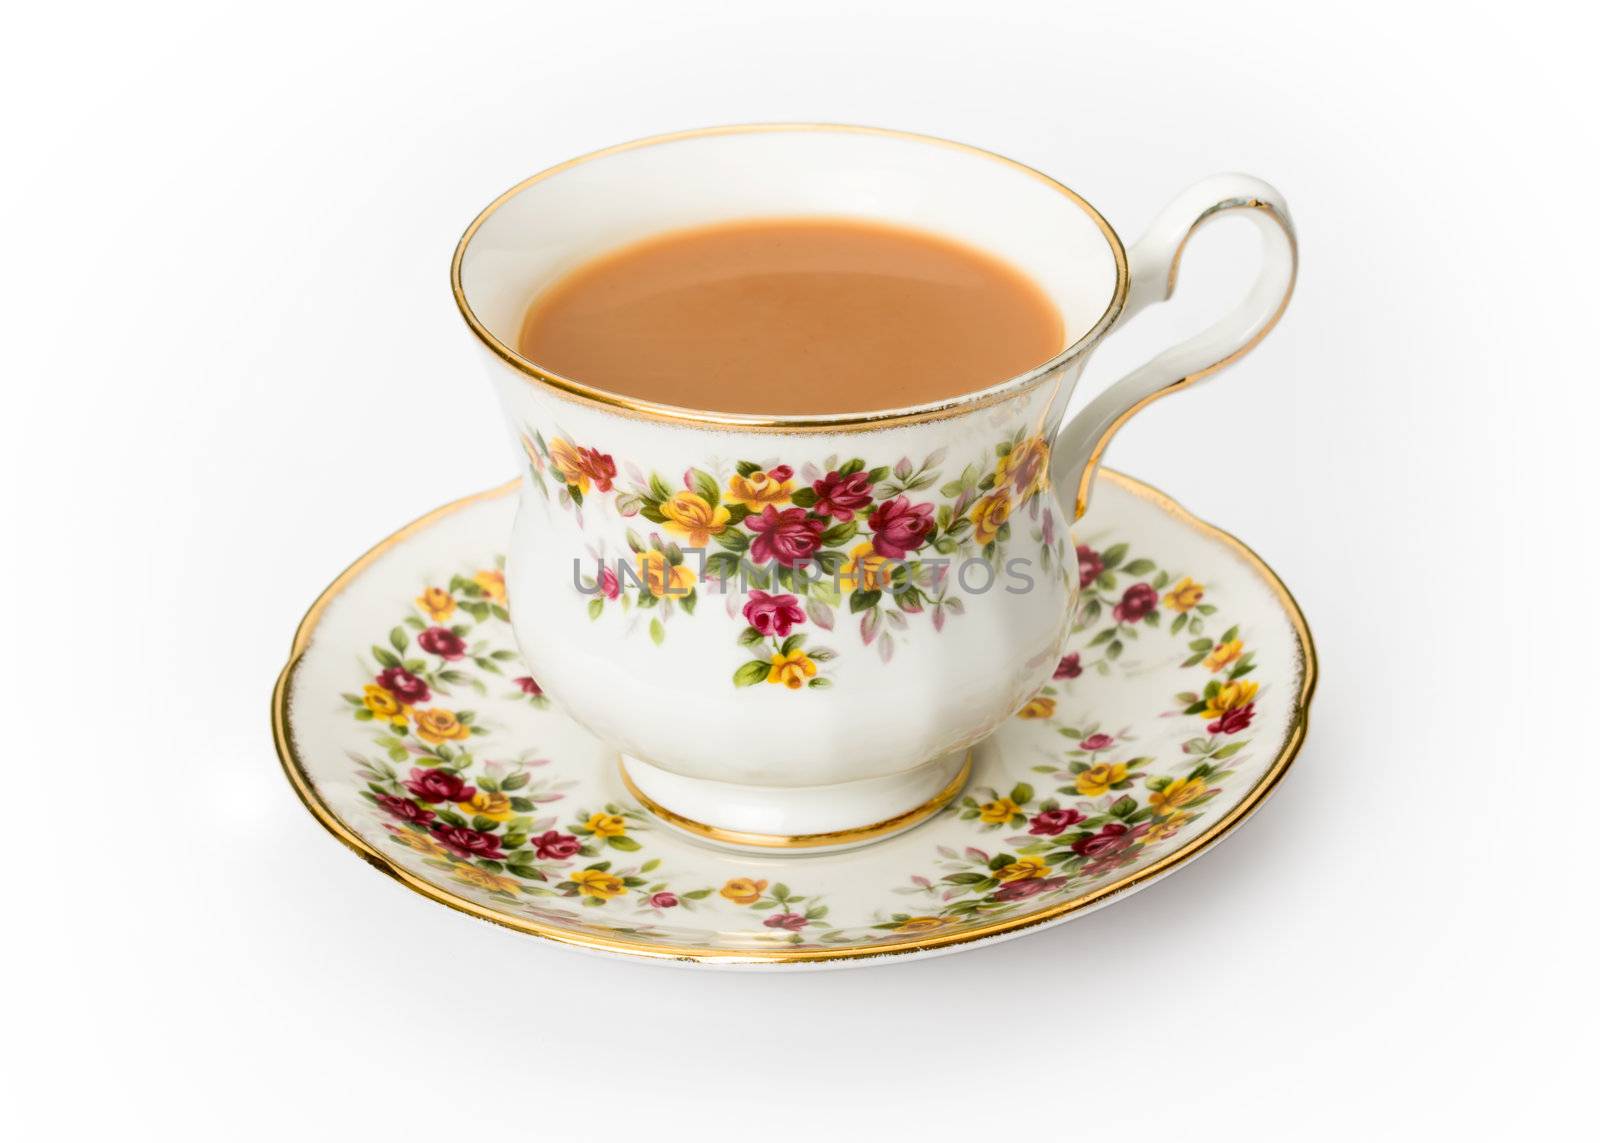 English tea in a bone china cup by RuthBlack